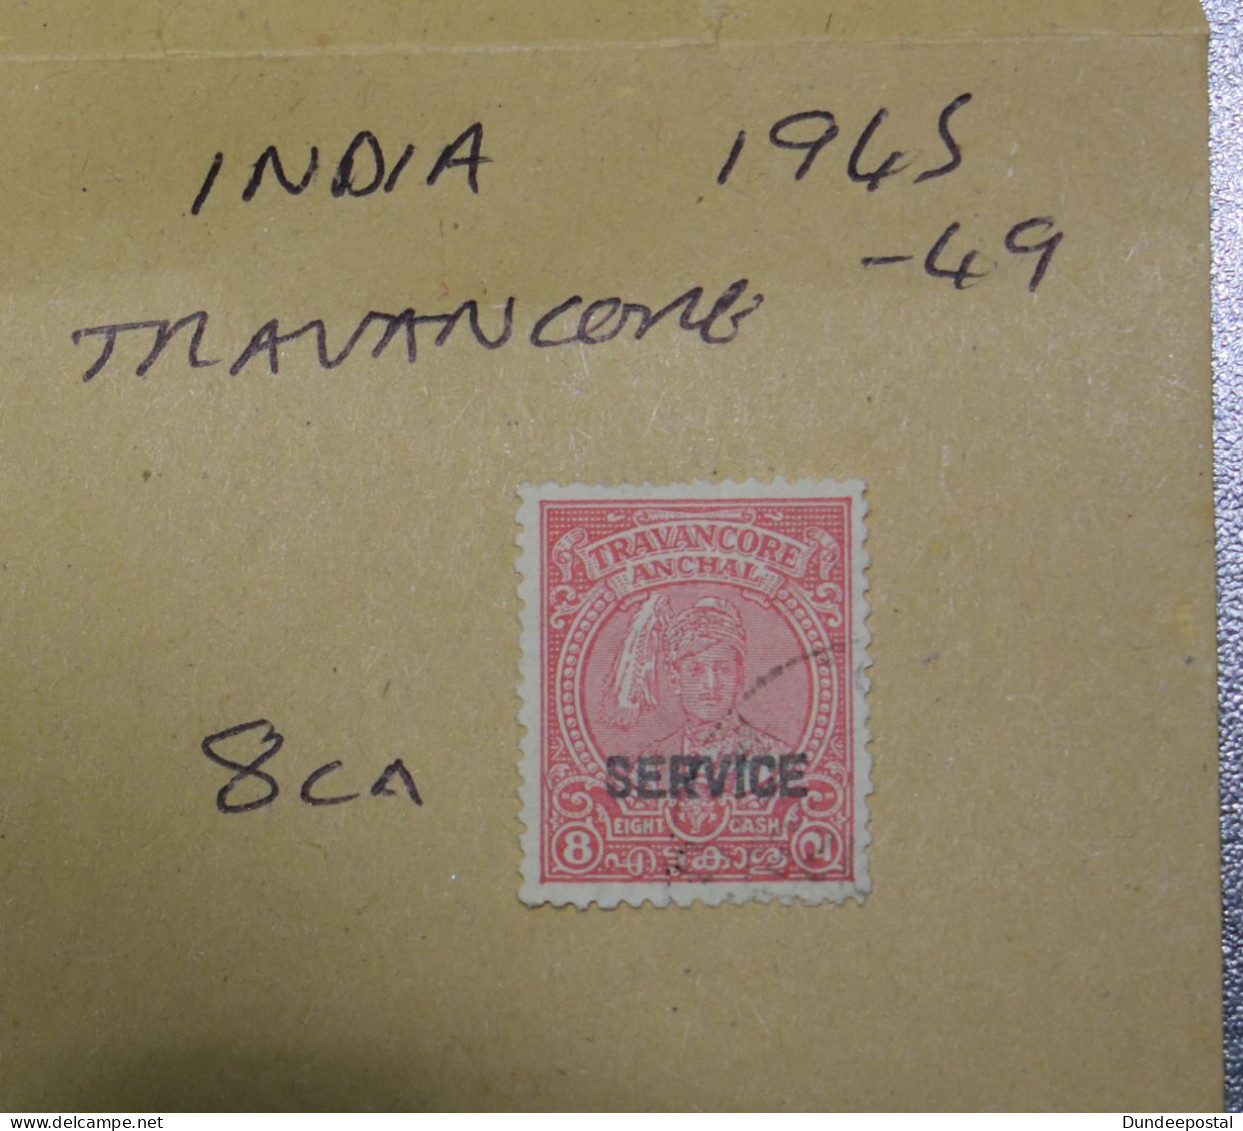 INDIA  STAMPS  Service 8ca  1945 - 49   (T10)   ~~L@@K~~ - Travancore